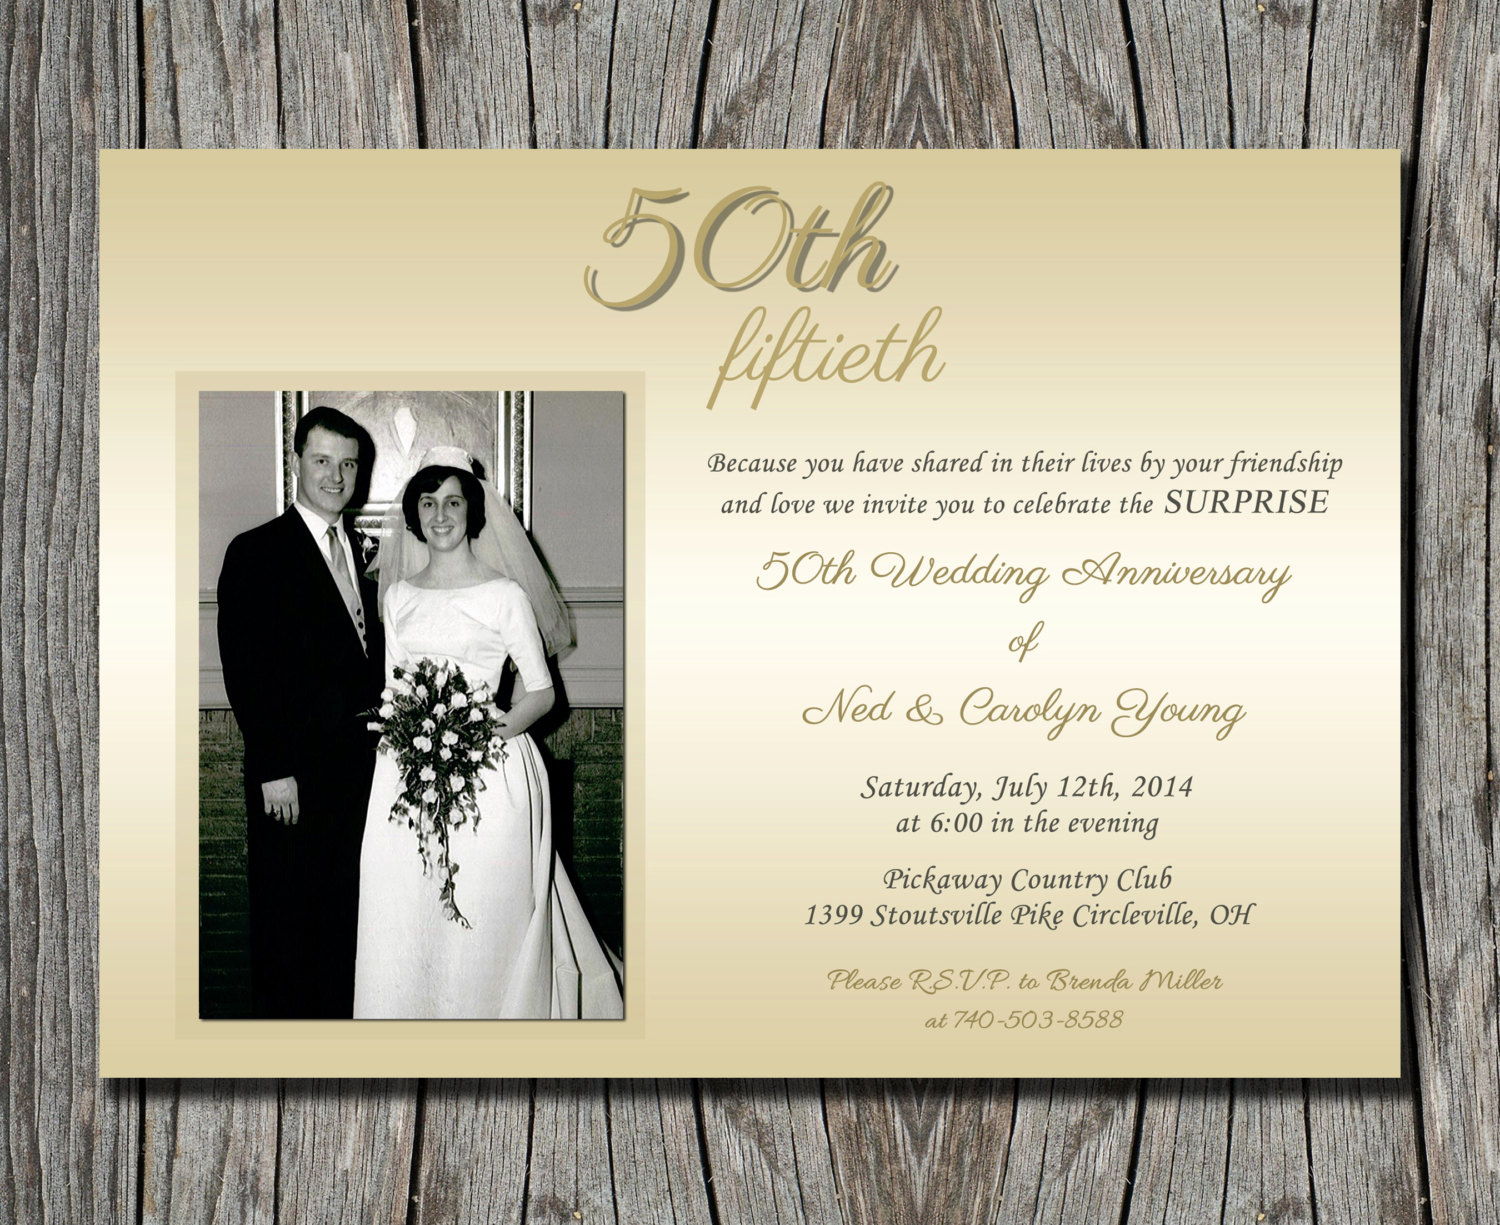 50th Wedding Anniversary Invitation Wording Lovely Surprise Wedding Anniversary Invitation 50th by Pegsprints